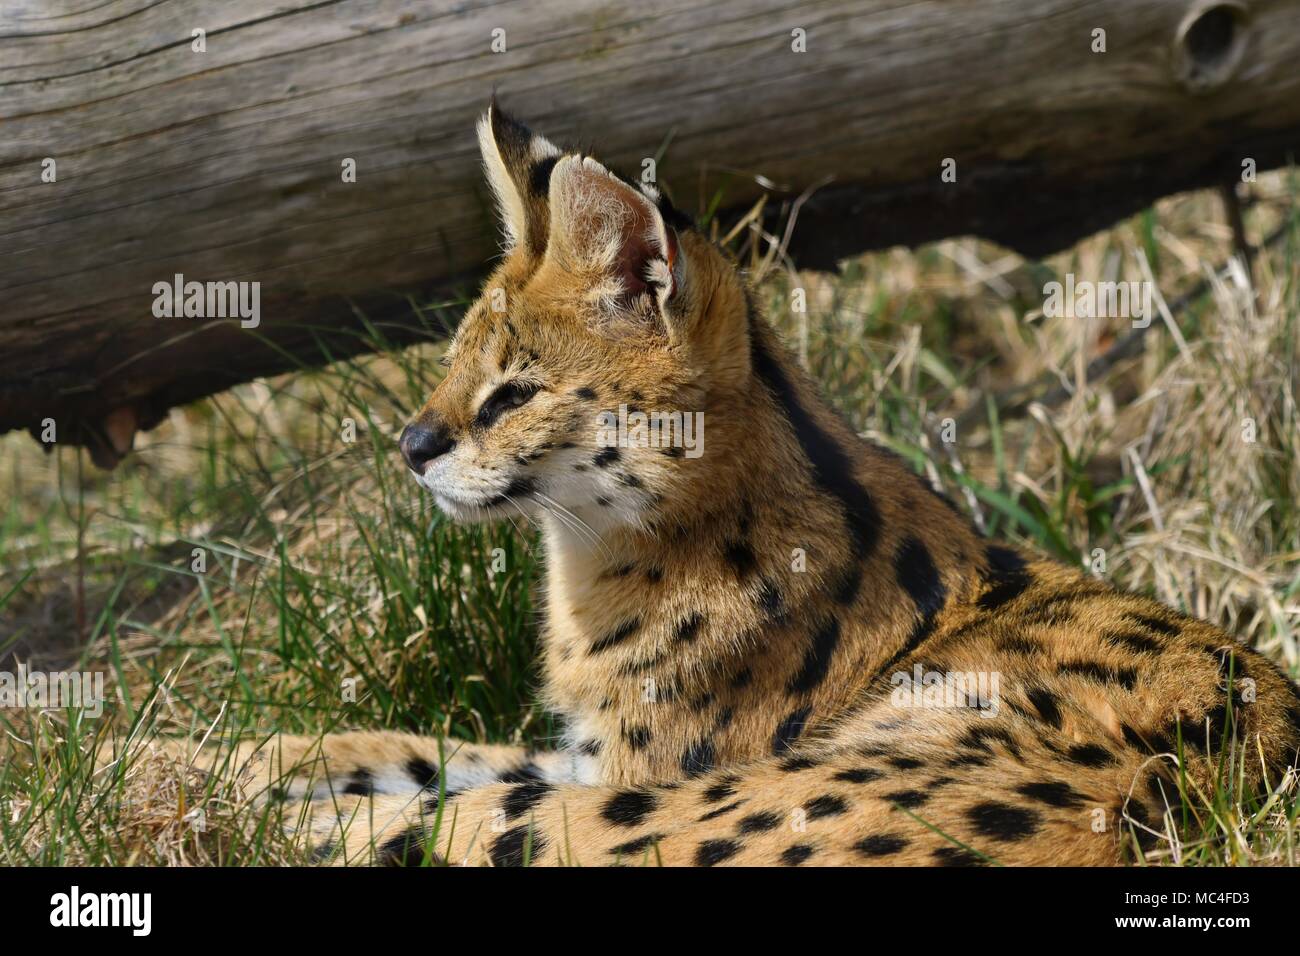 Leptailurus serval - wilde afrikanische Katze, Nahaufnahme, isolierte Porträt Leptailurus serval - wilde afrikanische Katze, isolierte Porträt schließen Stockfoto